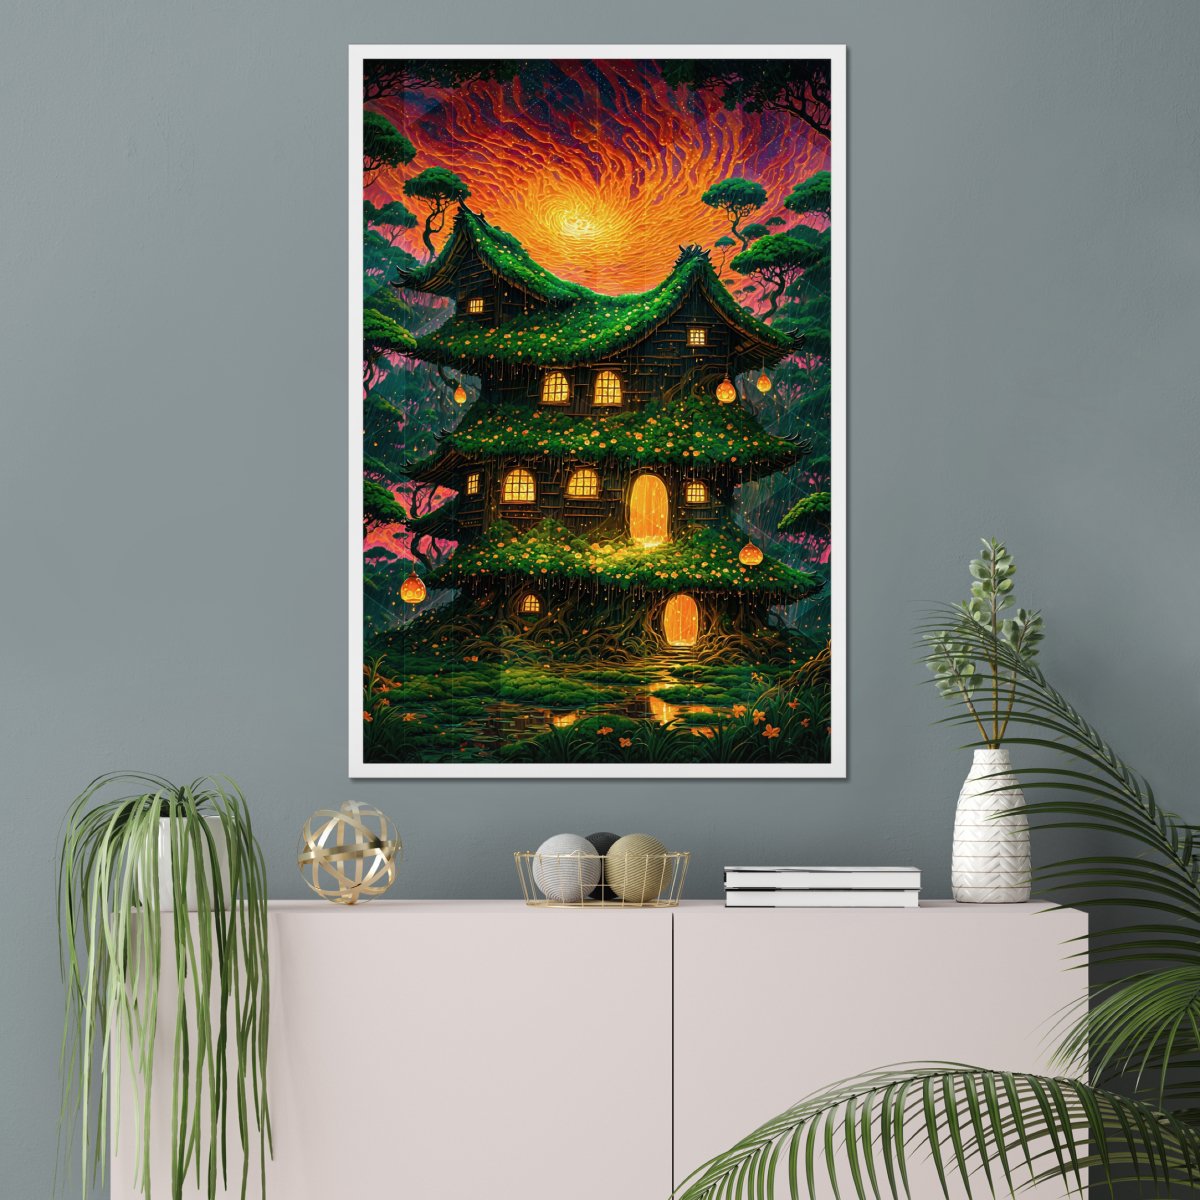 Honey maelstrom - Art print - Poster - Ever colorful